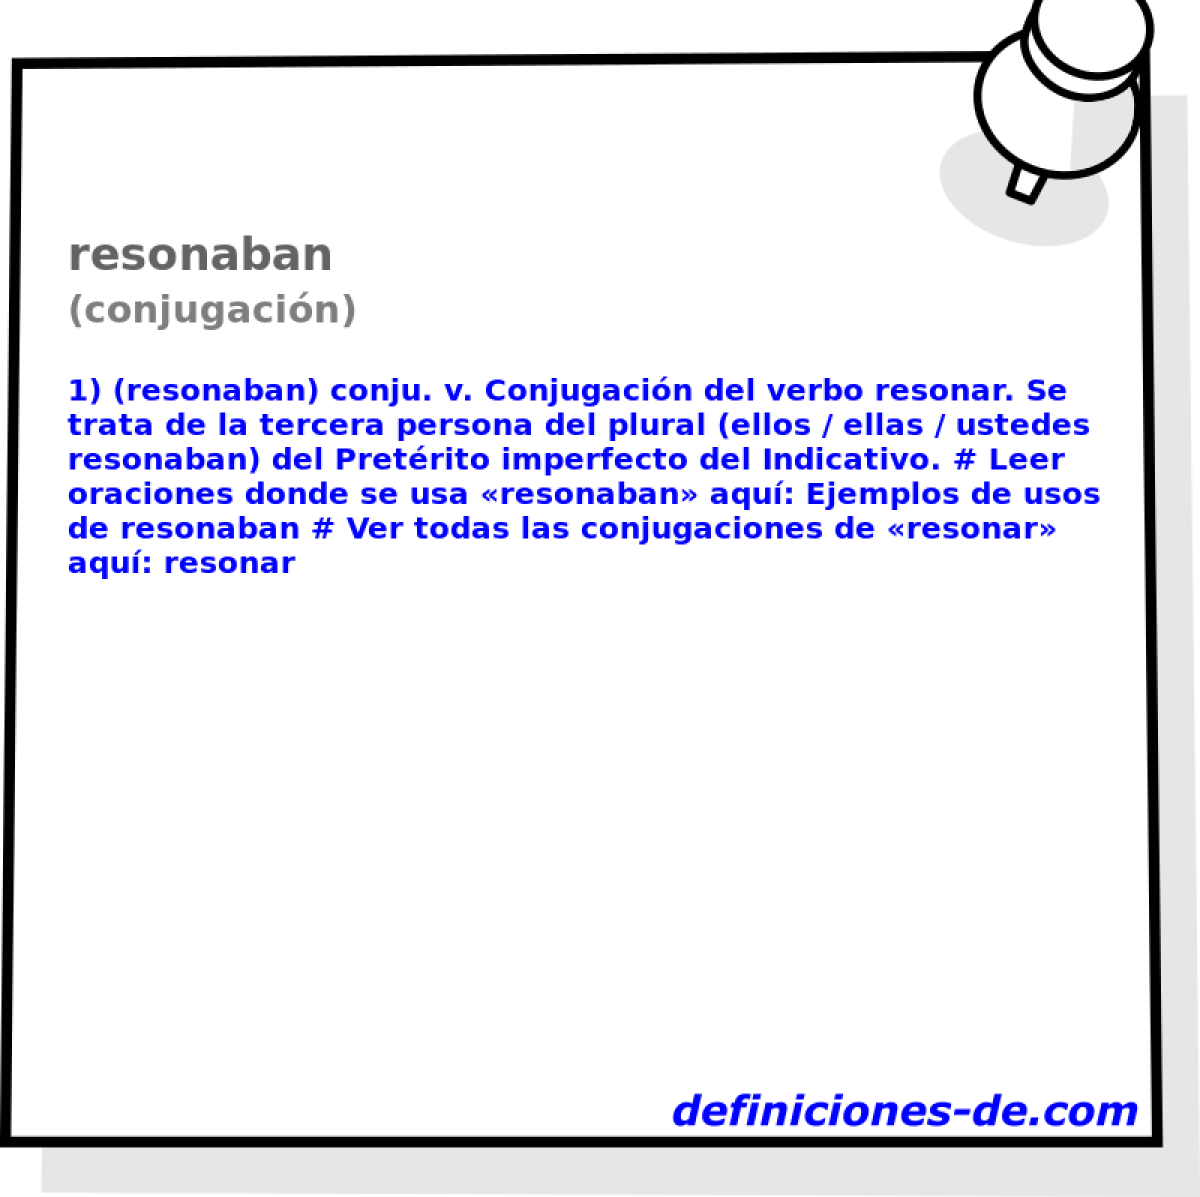 resonaban (conjugacin)